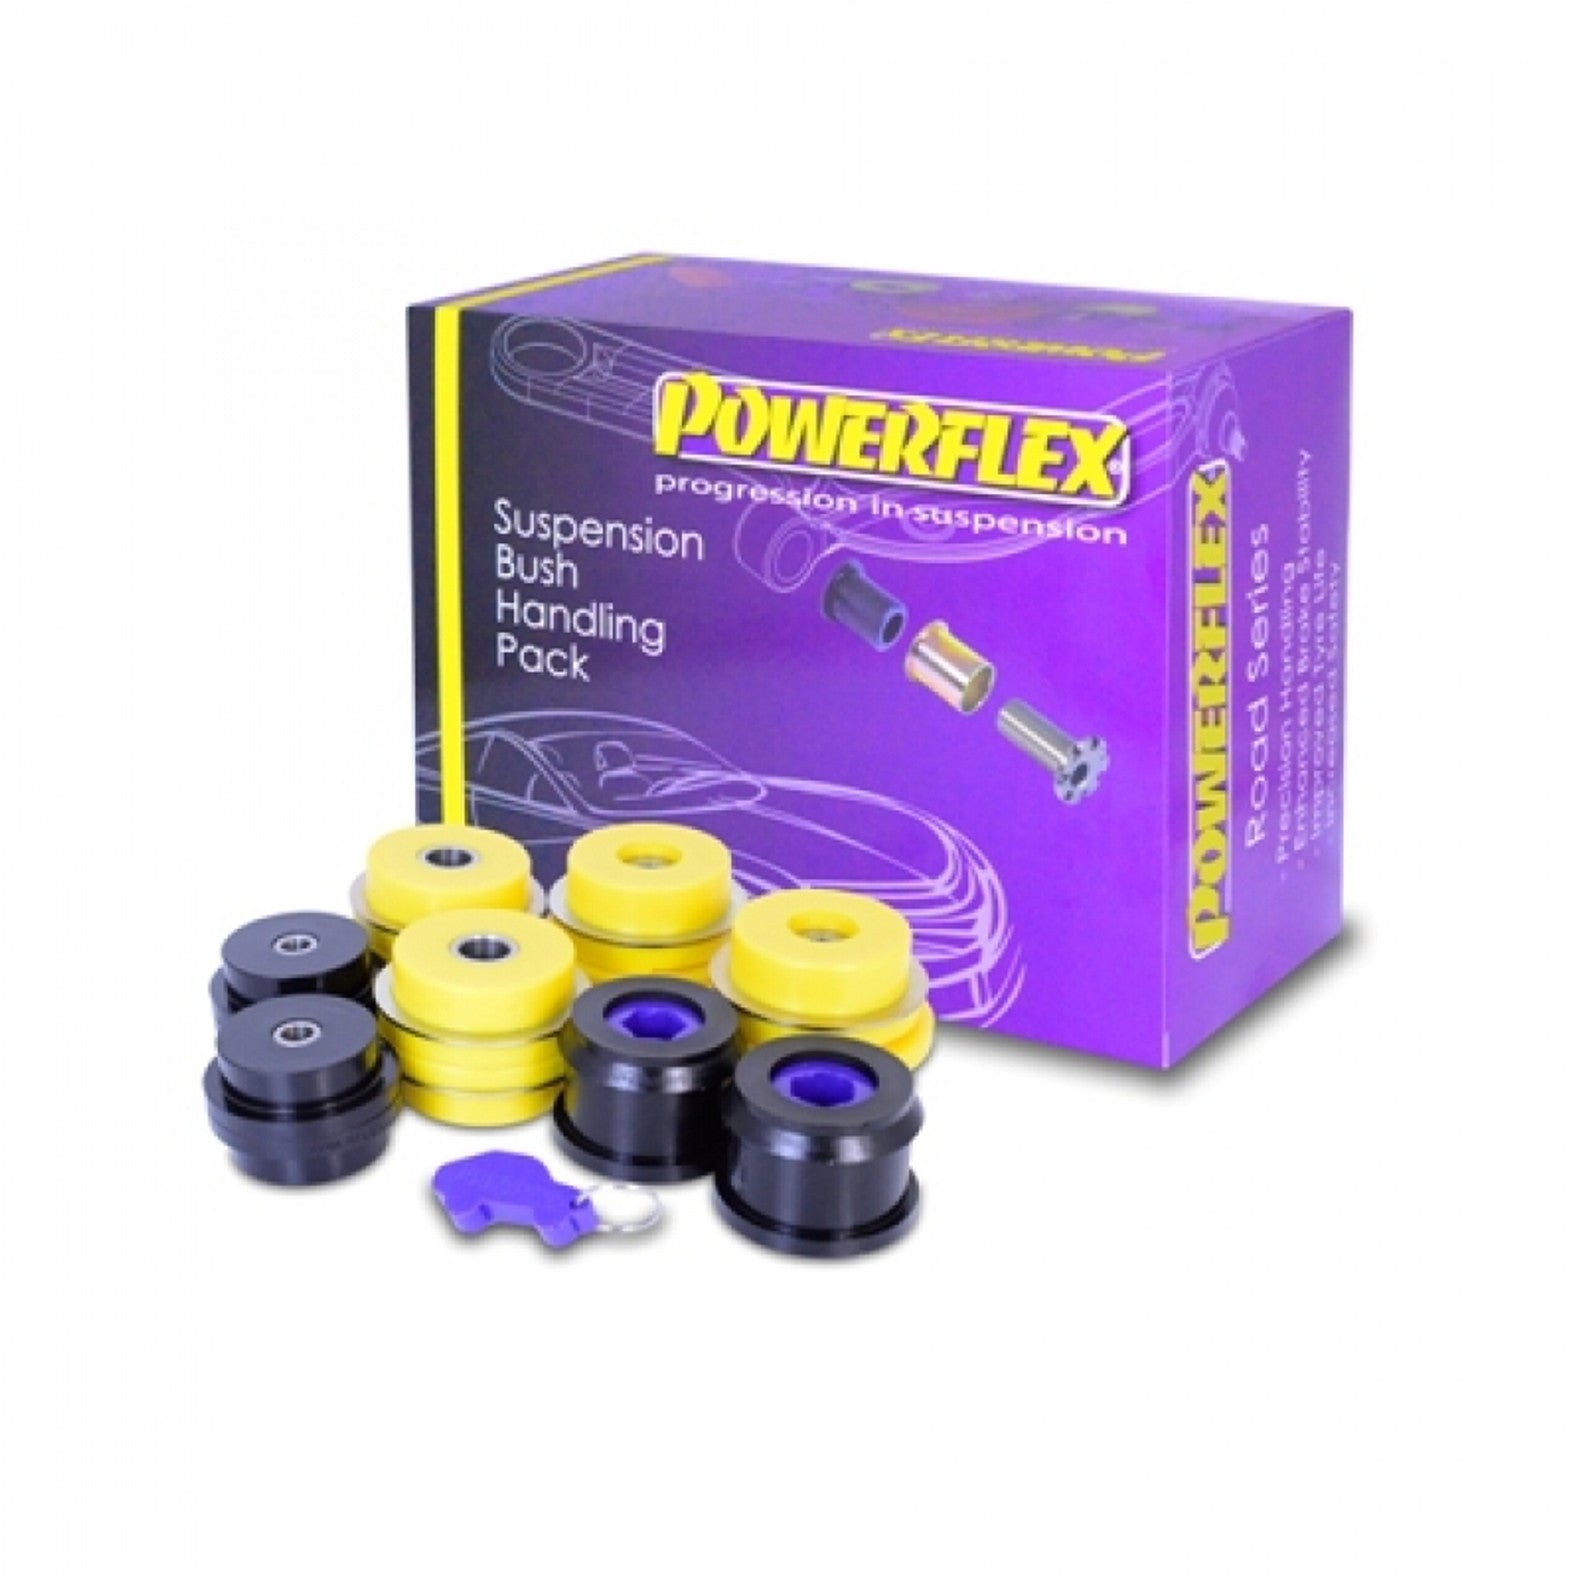 Powerflex Poly ignite performance